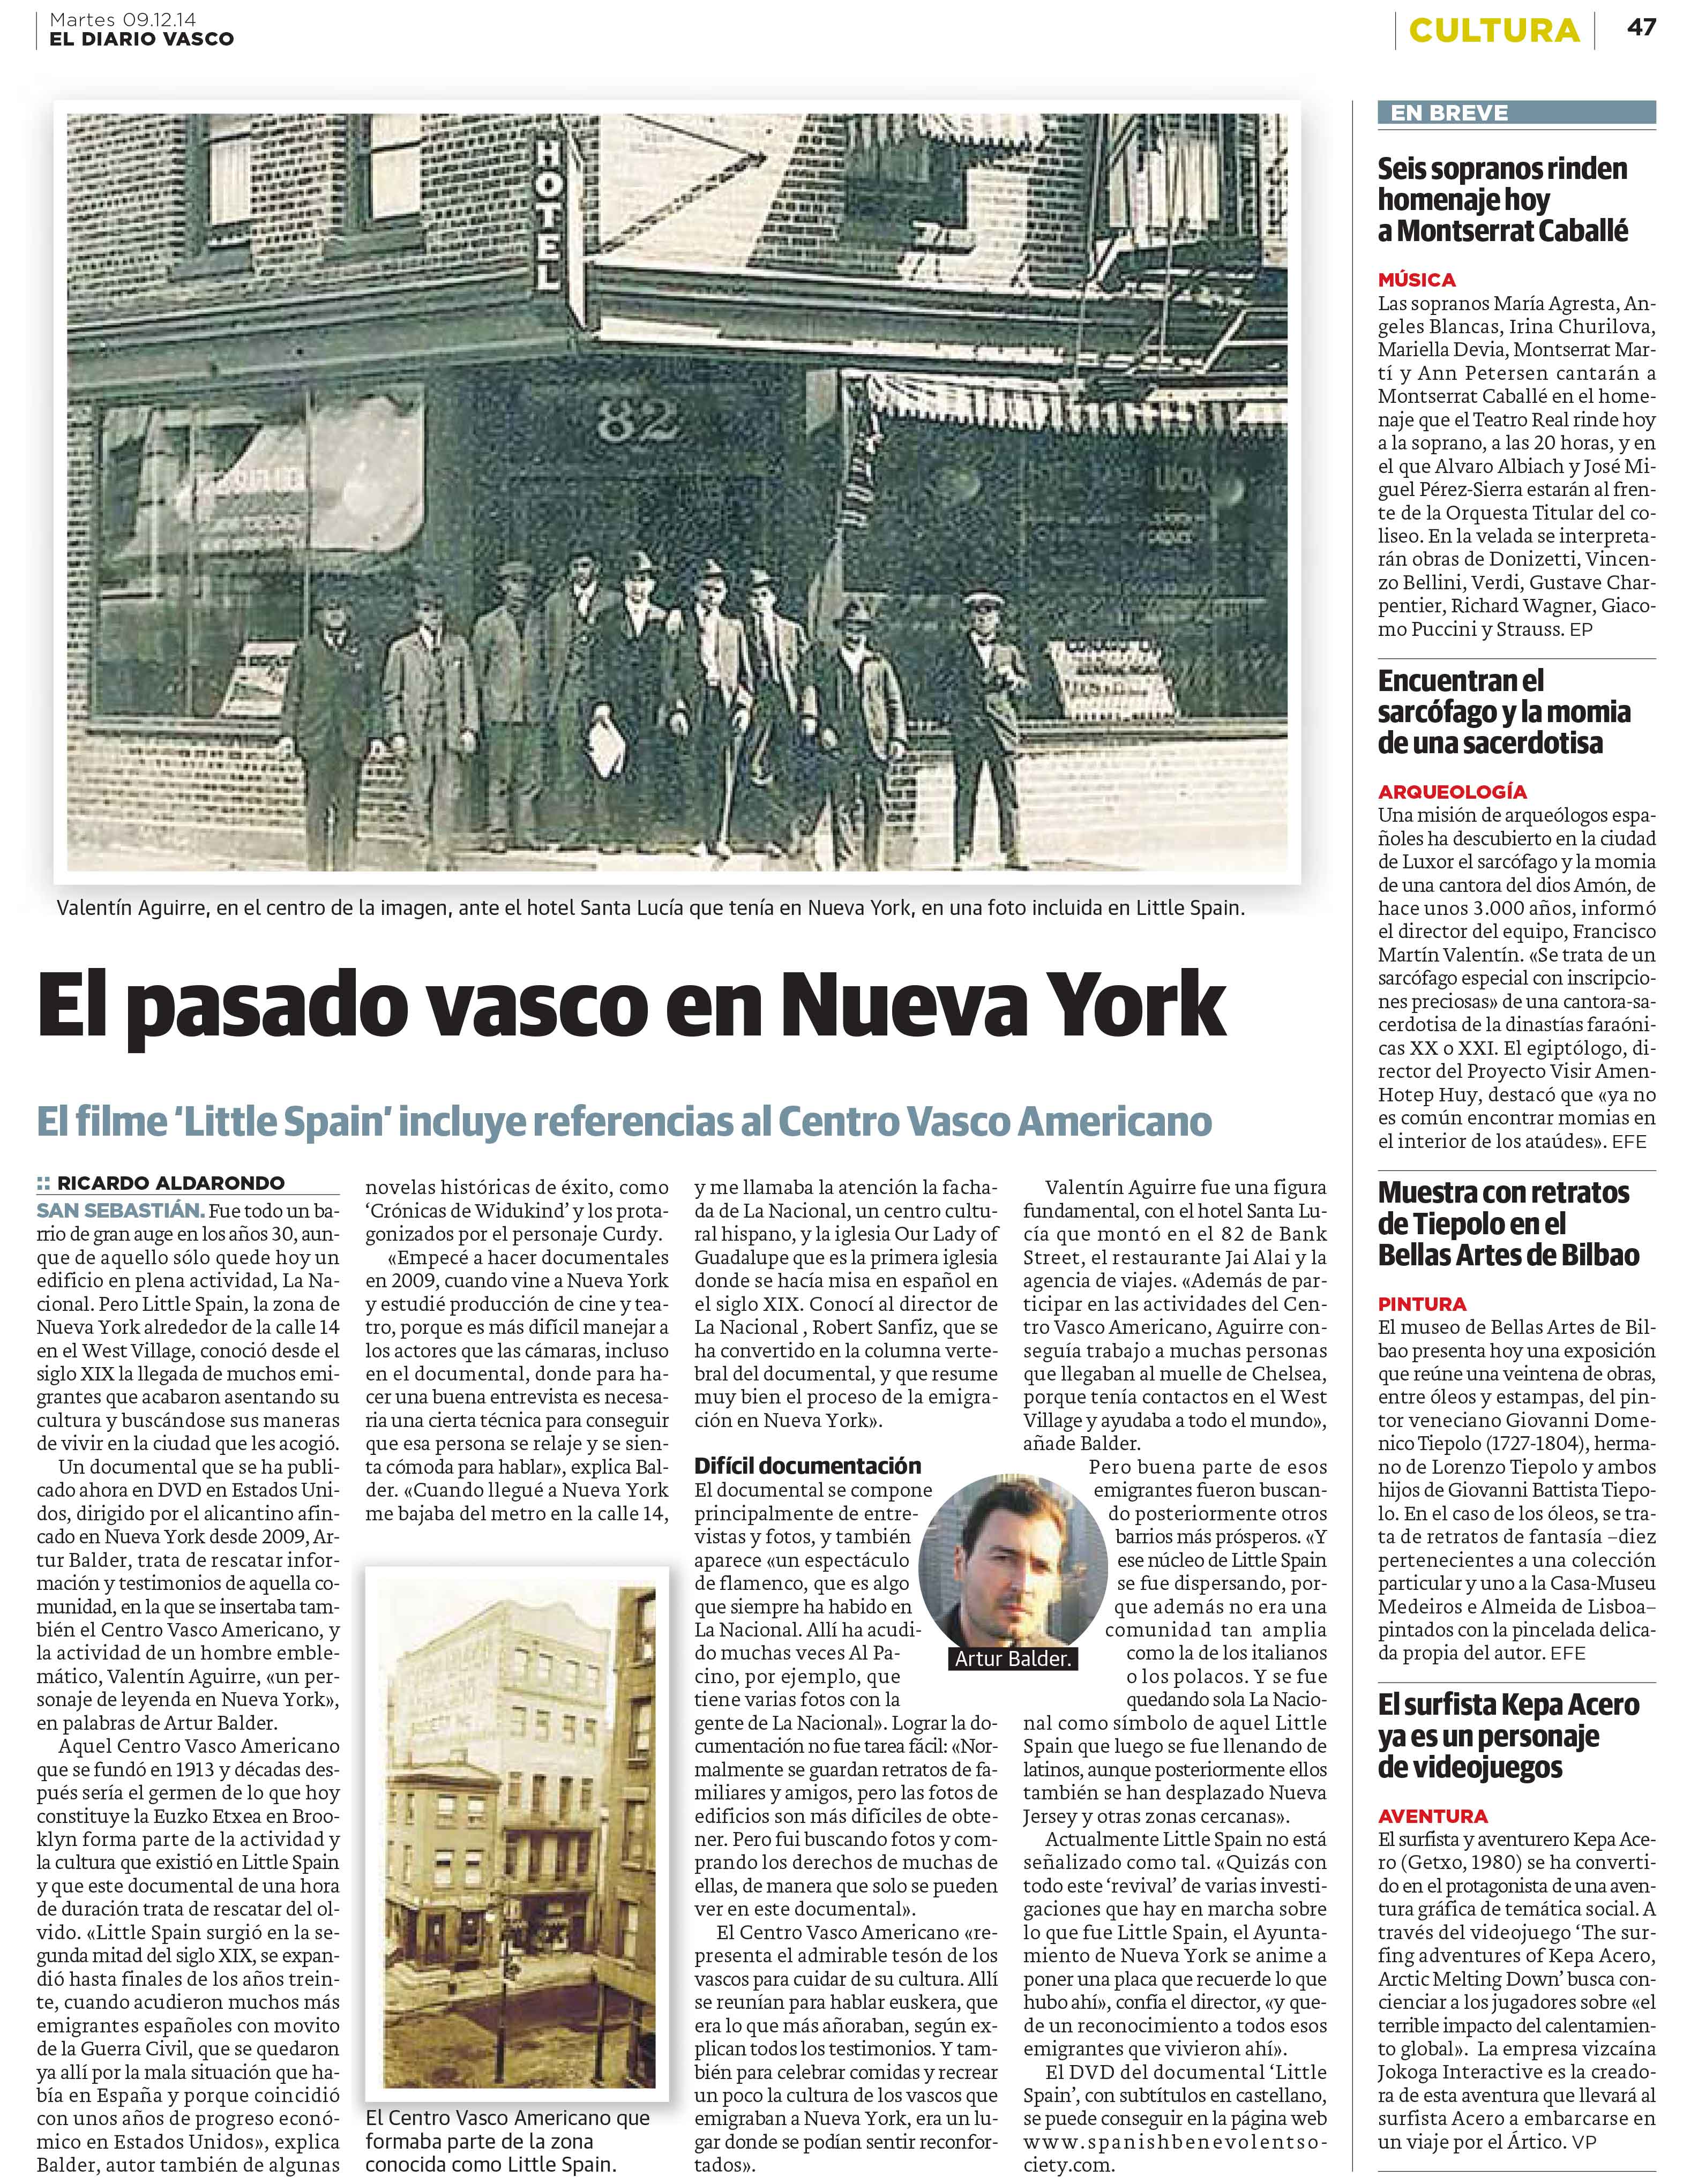 Diario Vasco, Little Spain, Artur Balder